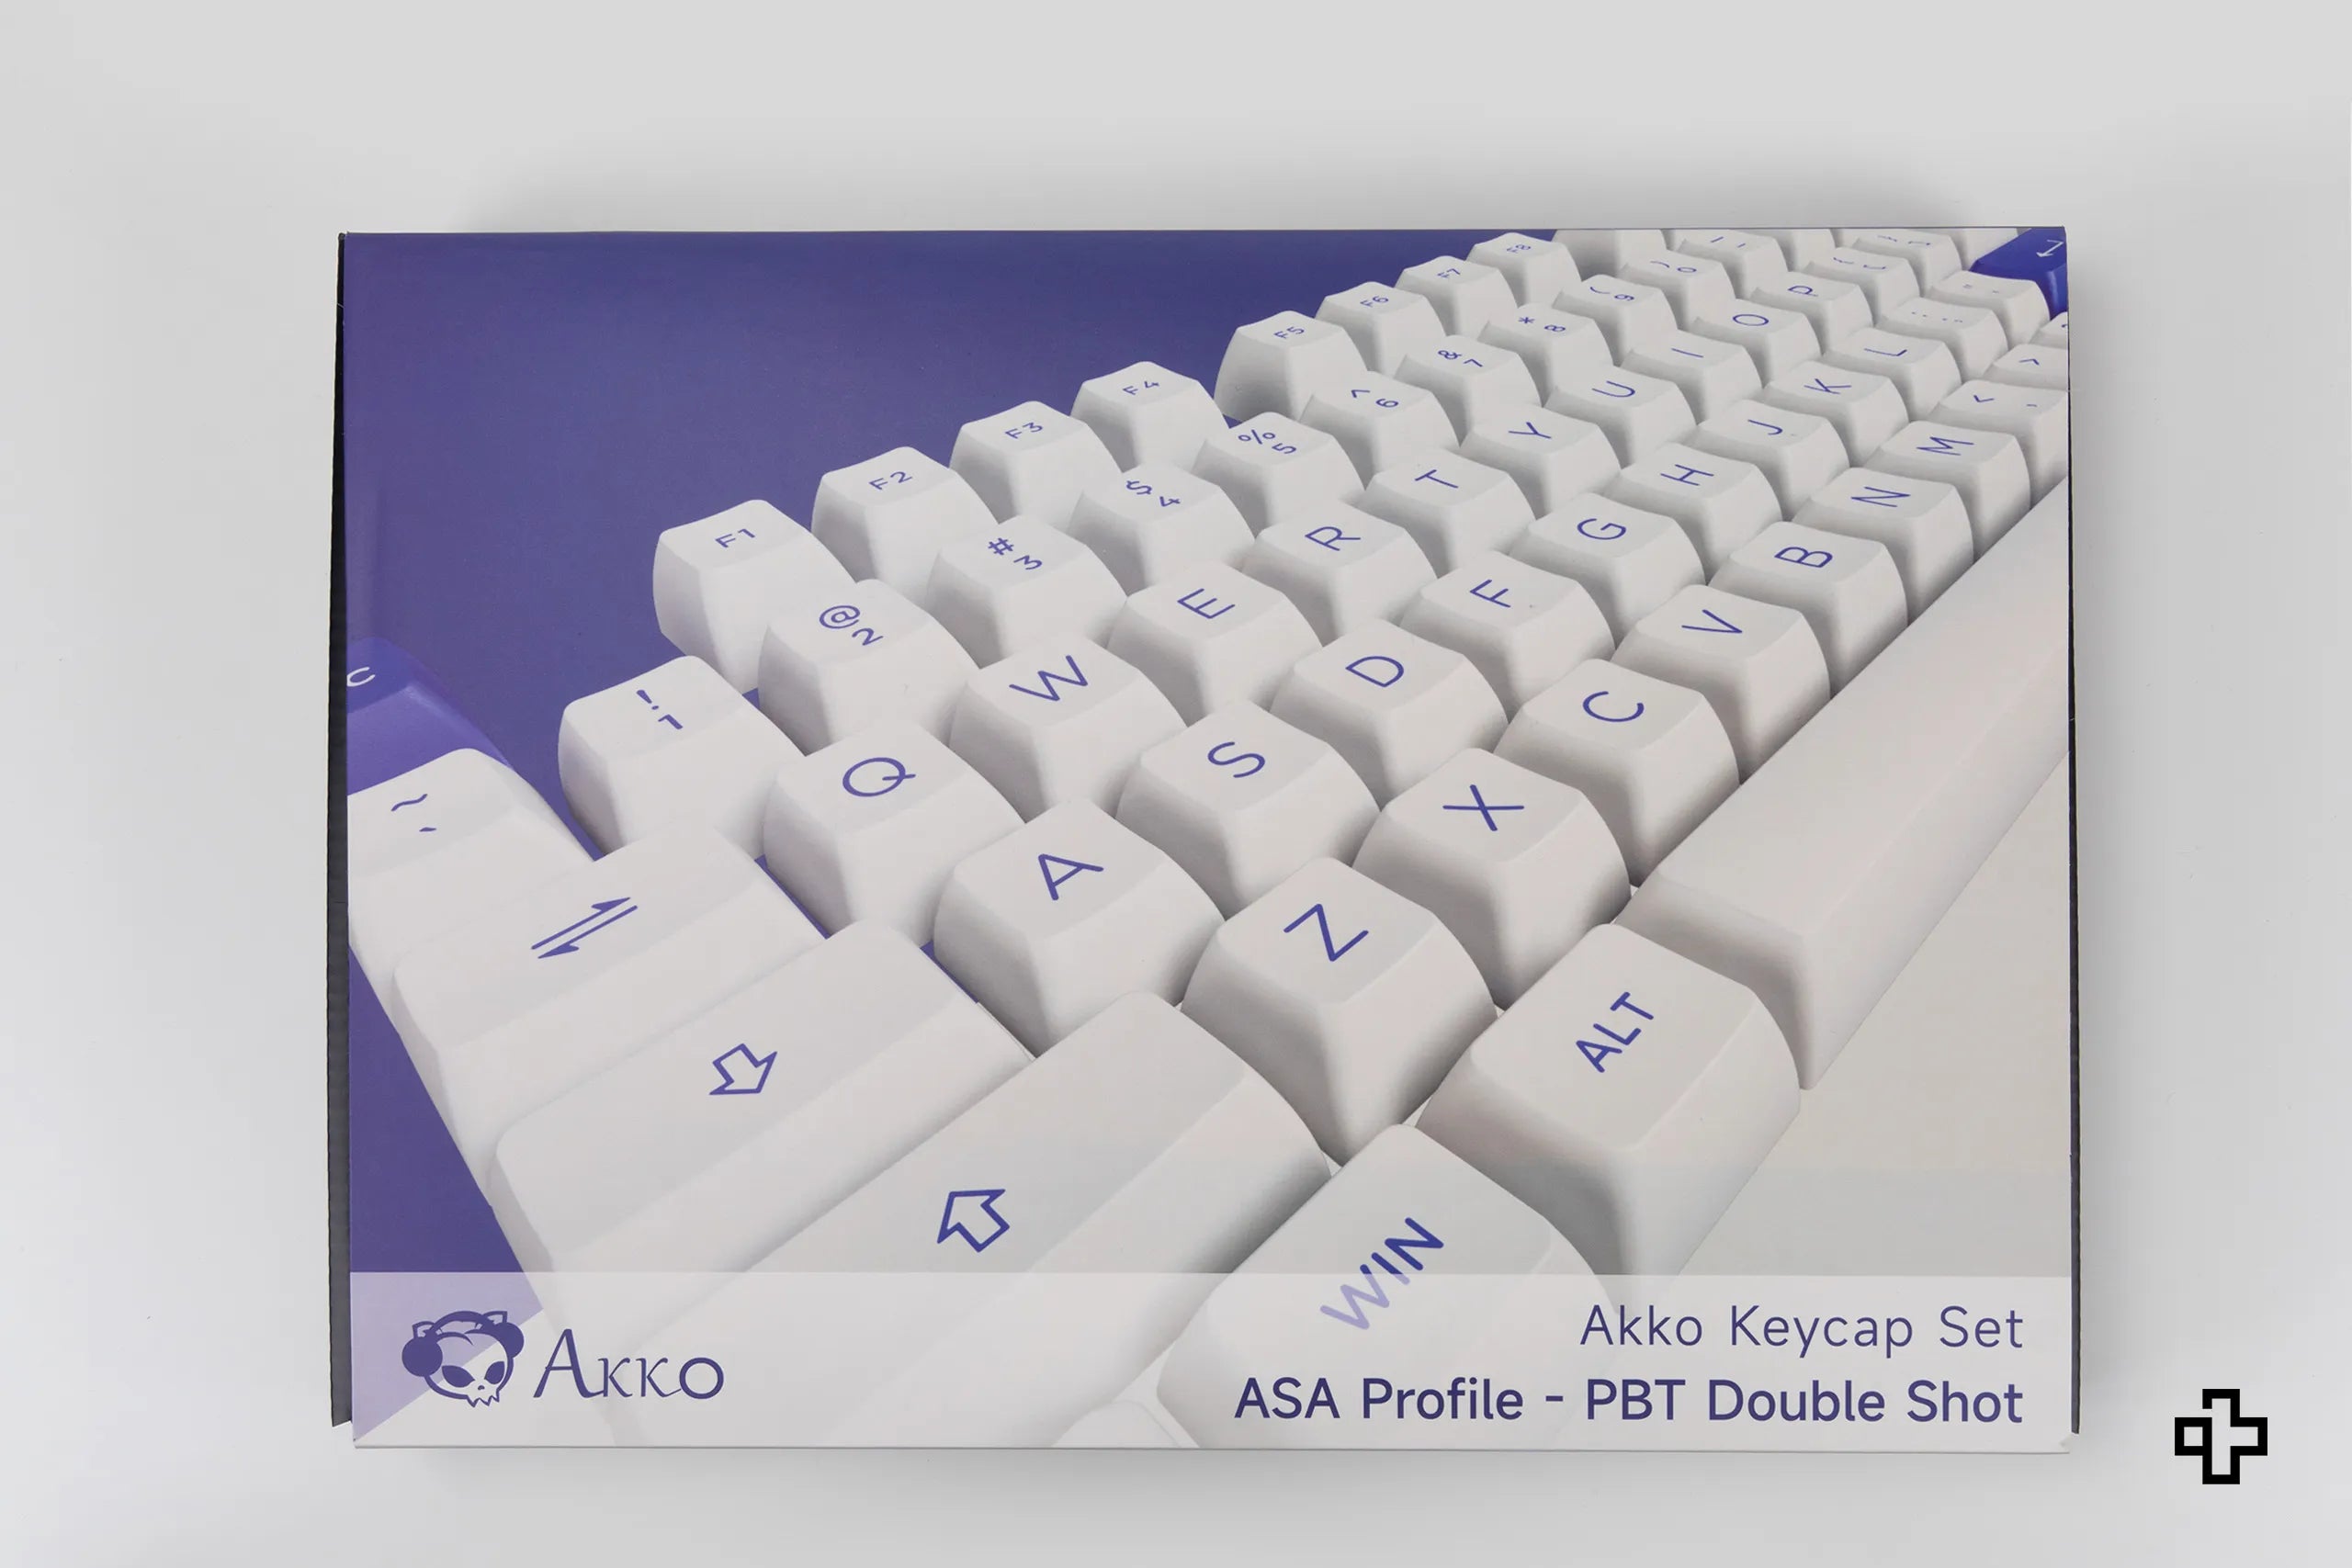 Set Geschmack Blau auf Weiß Akko PBT Double Shot Profil ASA